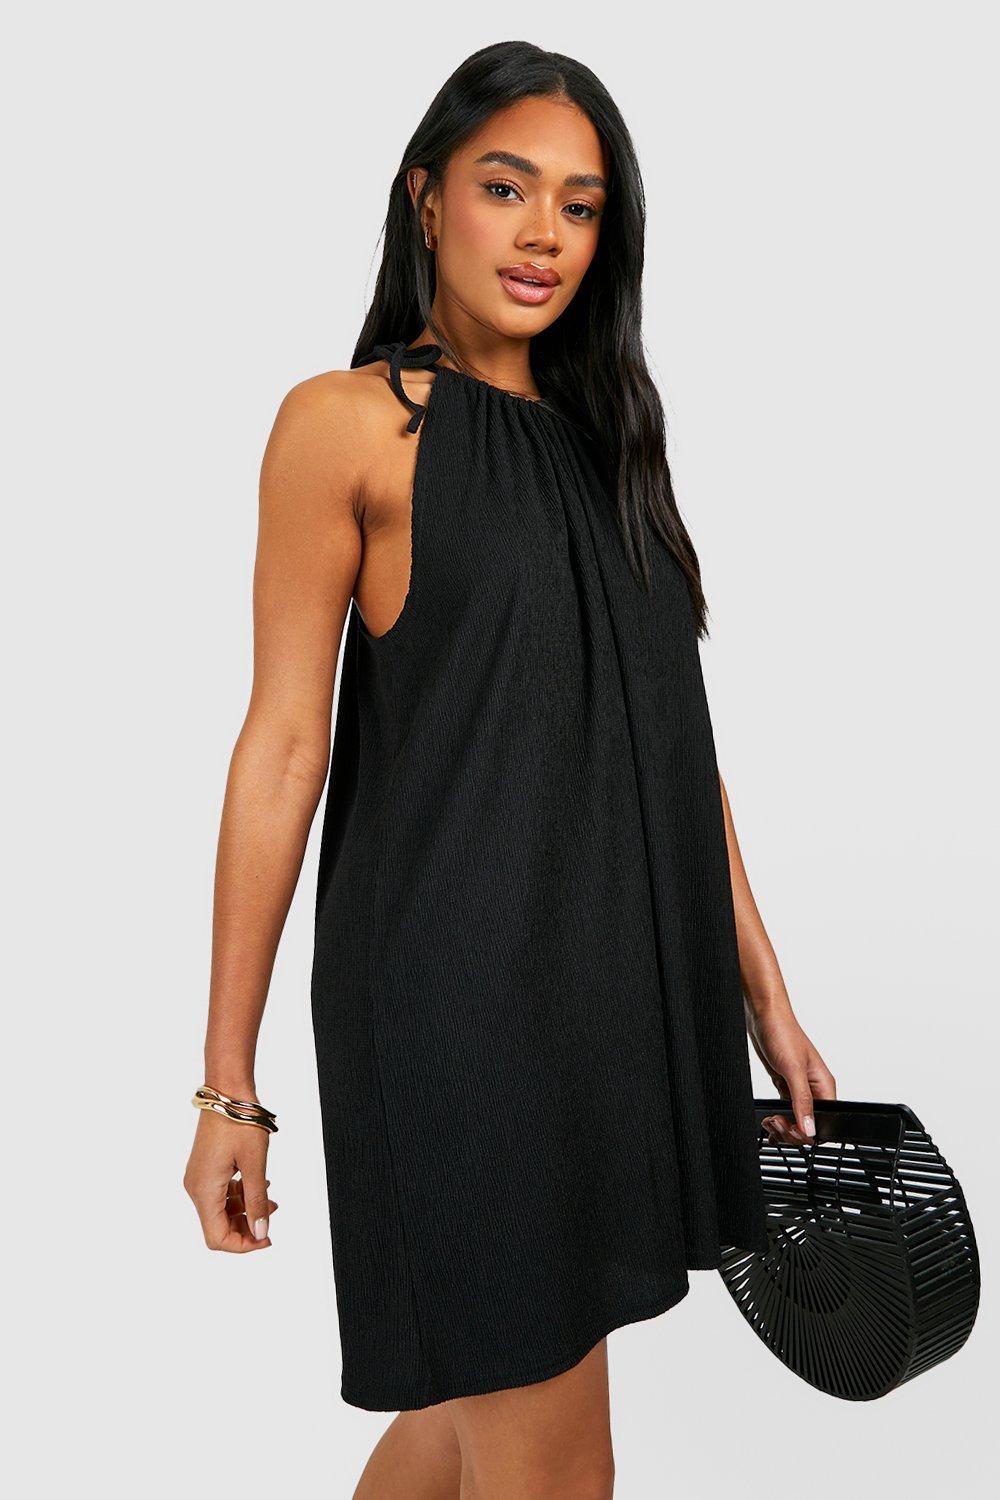 https://media.boohoo.com/i/boohoo/gzz51164_black_xl_2/female-black-textured-strappy-swing-dress